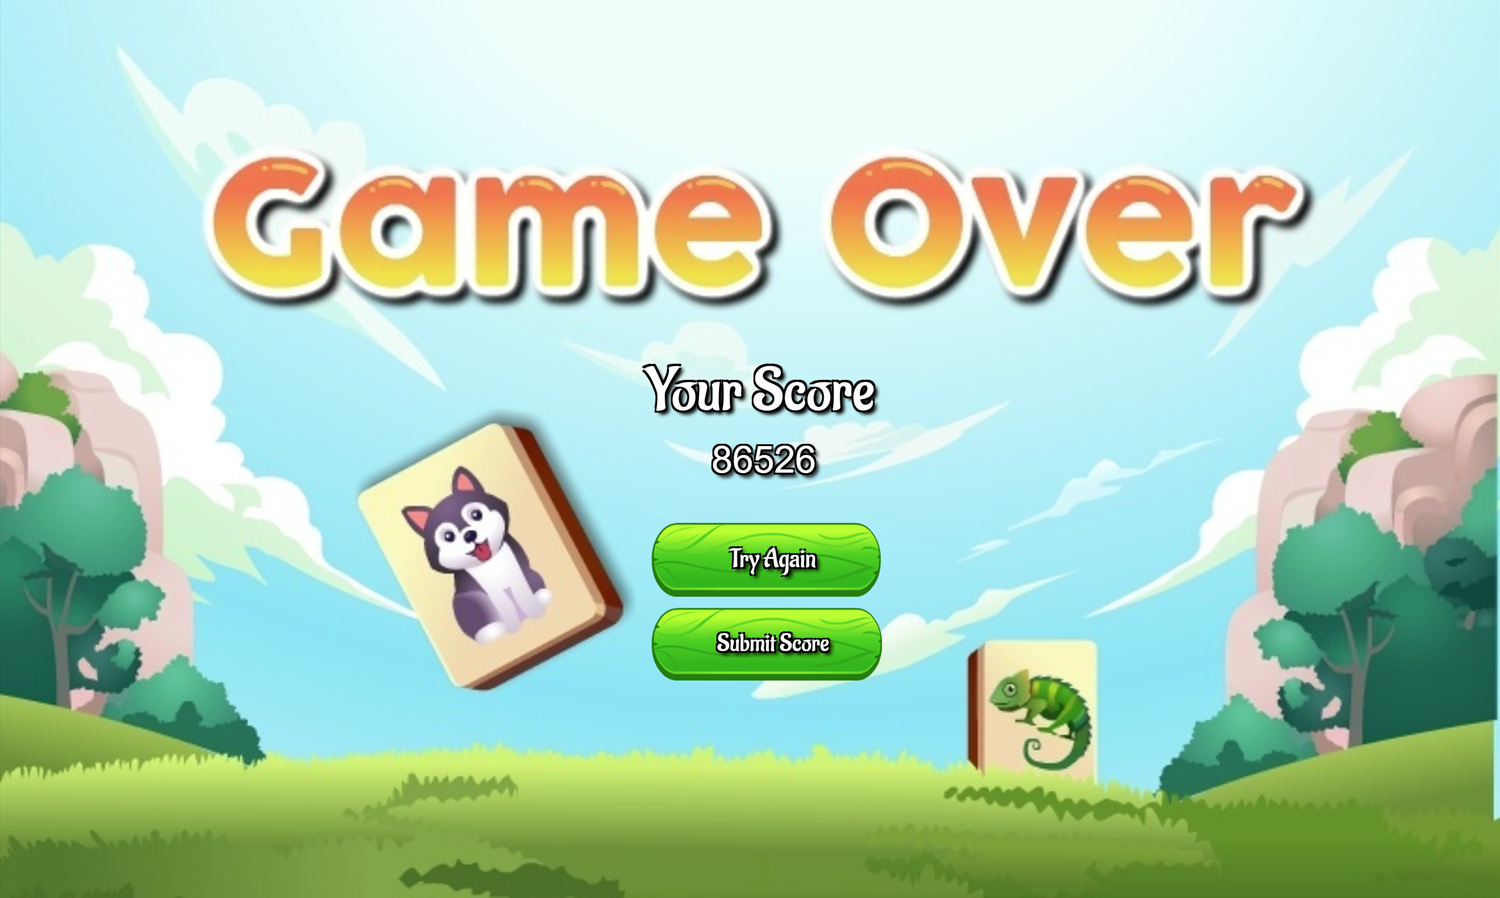 Pet Link Kids Game Over Screen Screenshot.